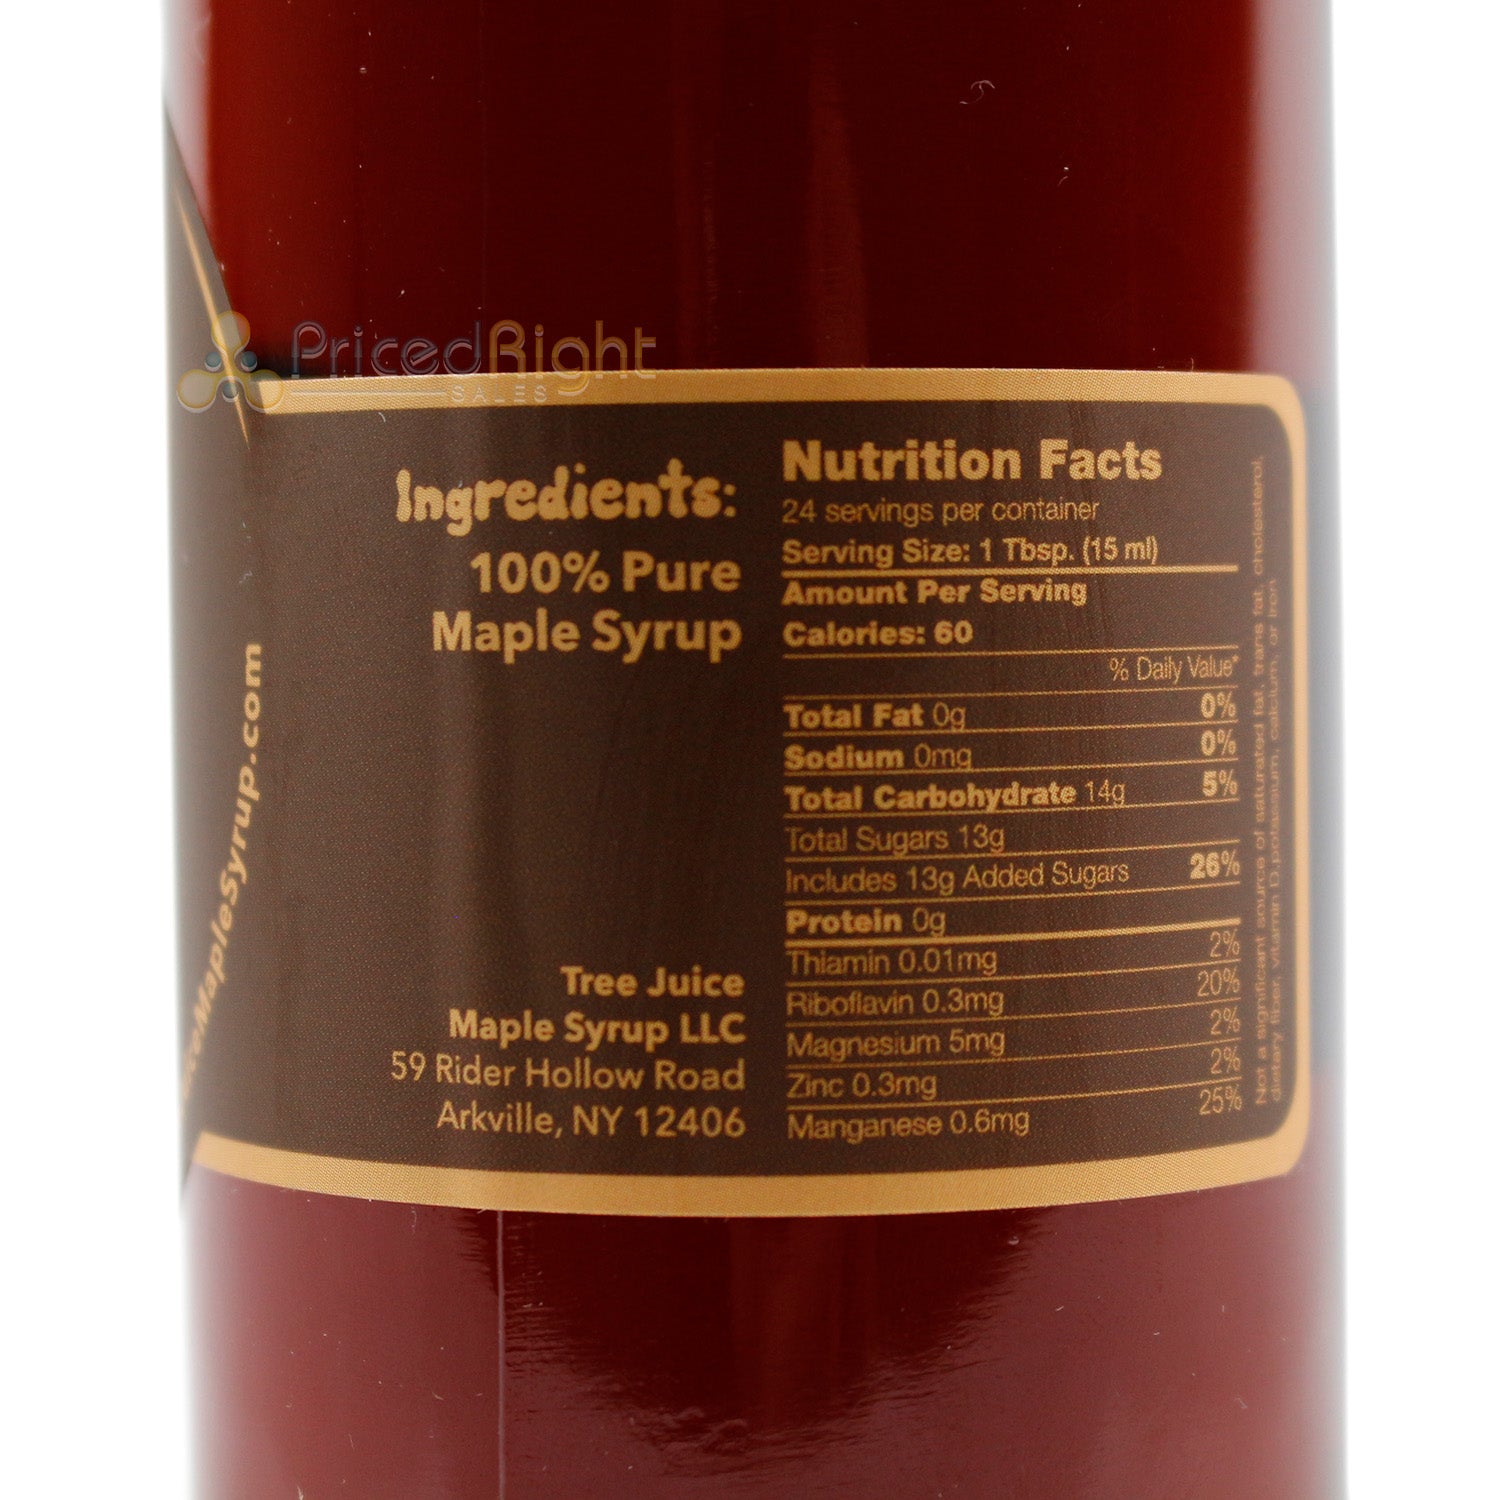 Tree Juice Pure Maple Syrup Dark Robust Flavor Gluten-Free, Paleo, Non-GMO 12 oz